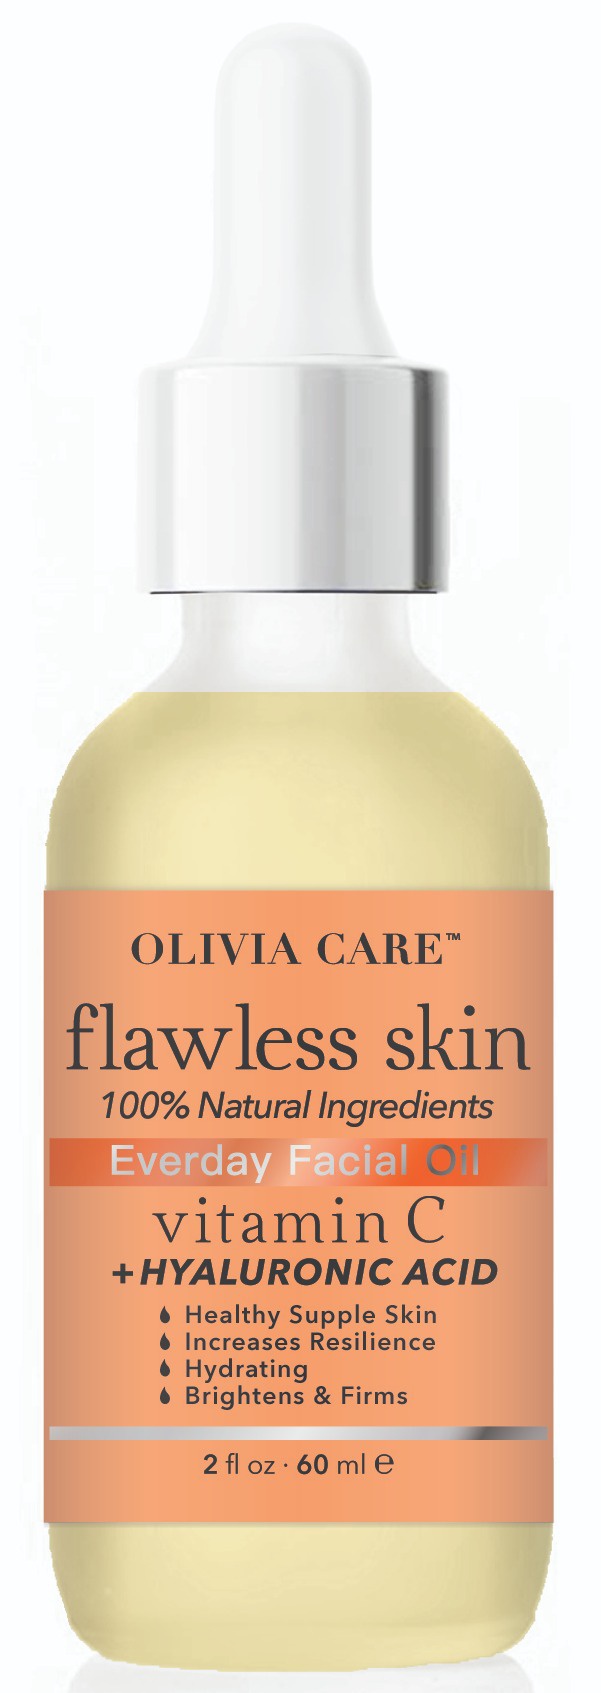 Olivia Care Flawless Skin Vitamin C + Hyaluronic Acid Everyday Facial Oil